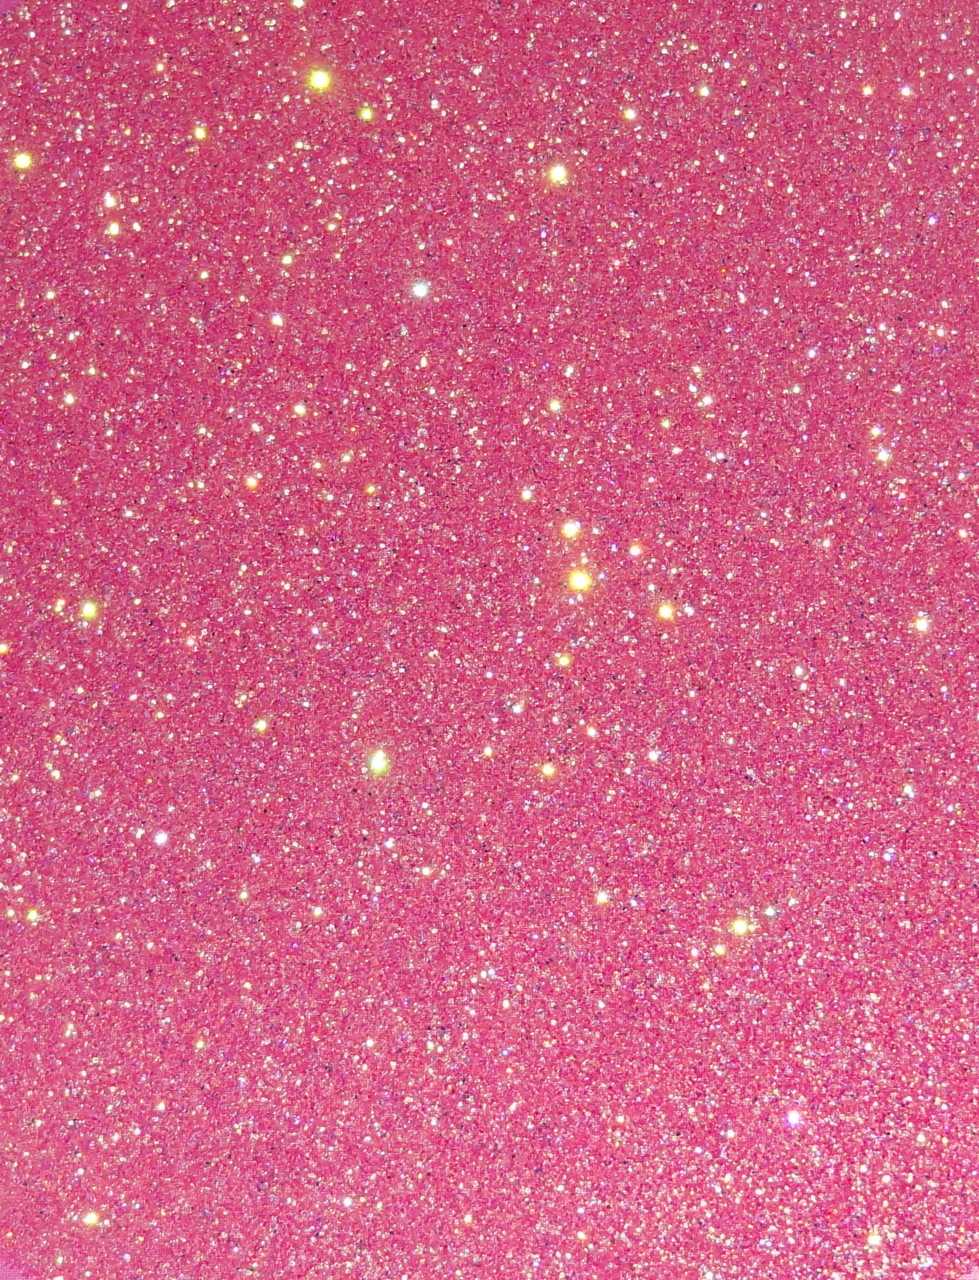 Background Pink Sparkles Kidcom The Wallpaper Red Glitter Of Pc Full